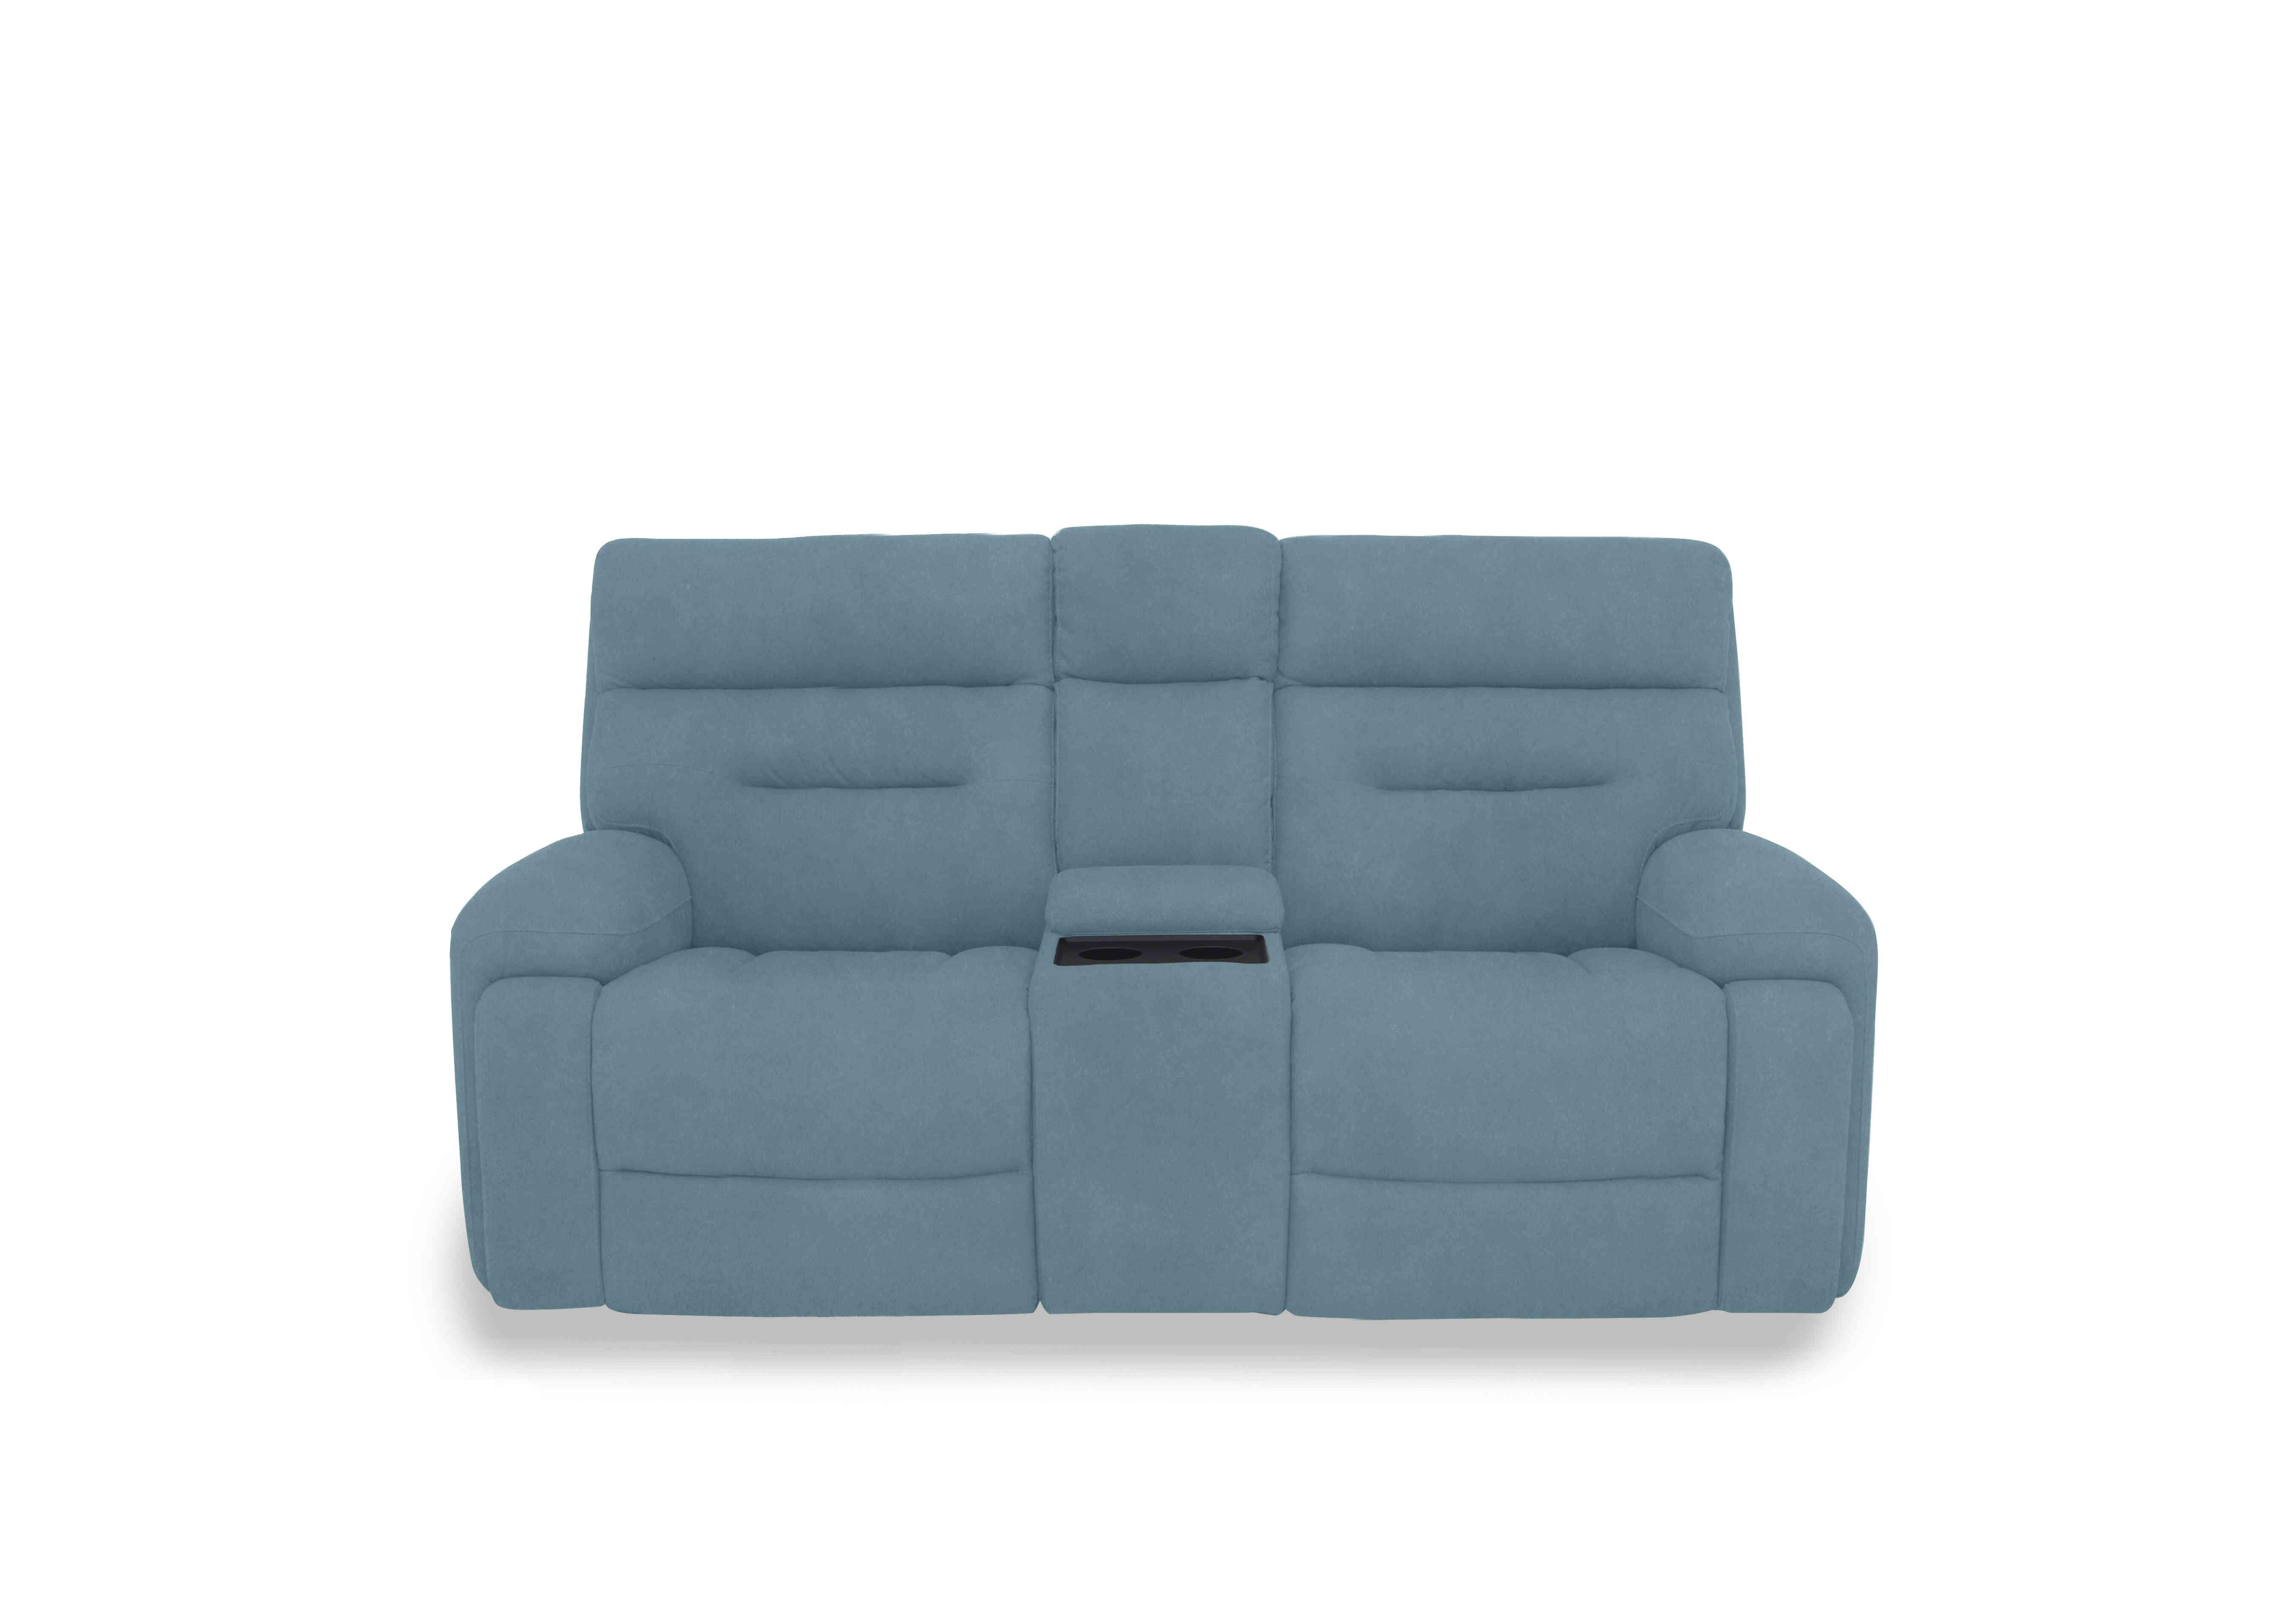 Cinemax Media 2 Seater Fabric Power Recliner Sofa with Power Headrests in Vv-0312 Velvet Blu on Furniture Village